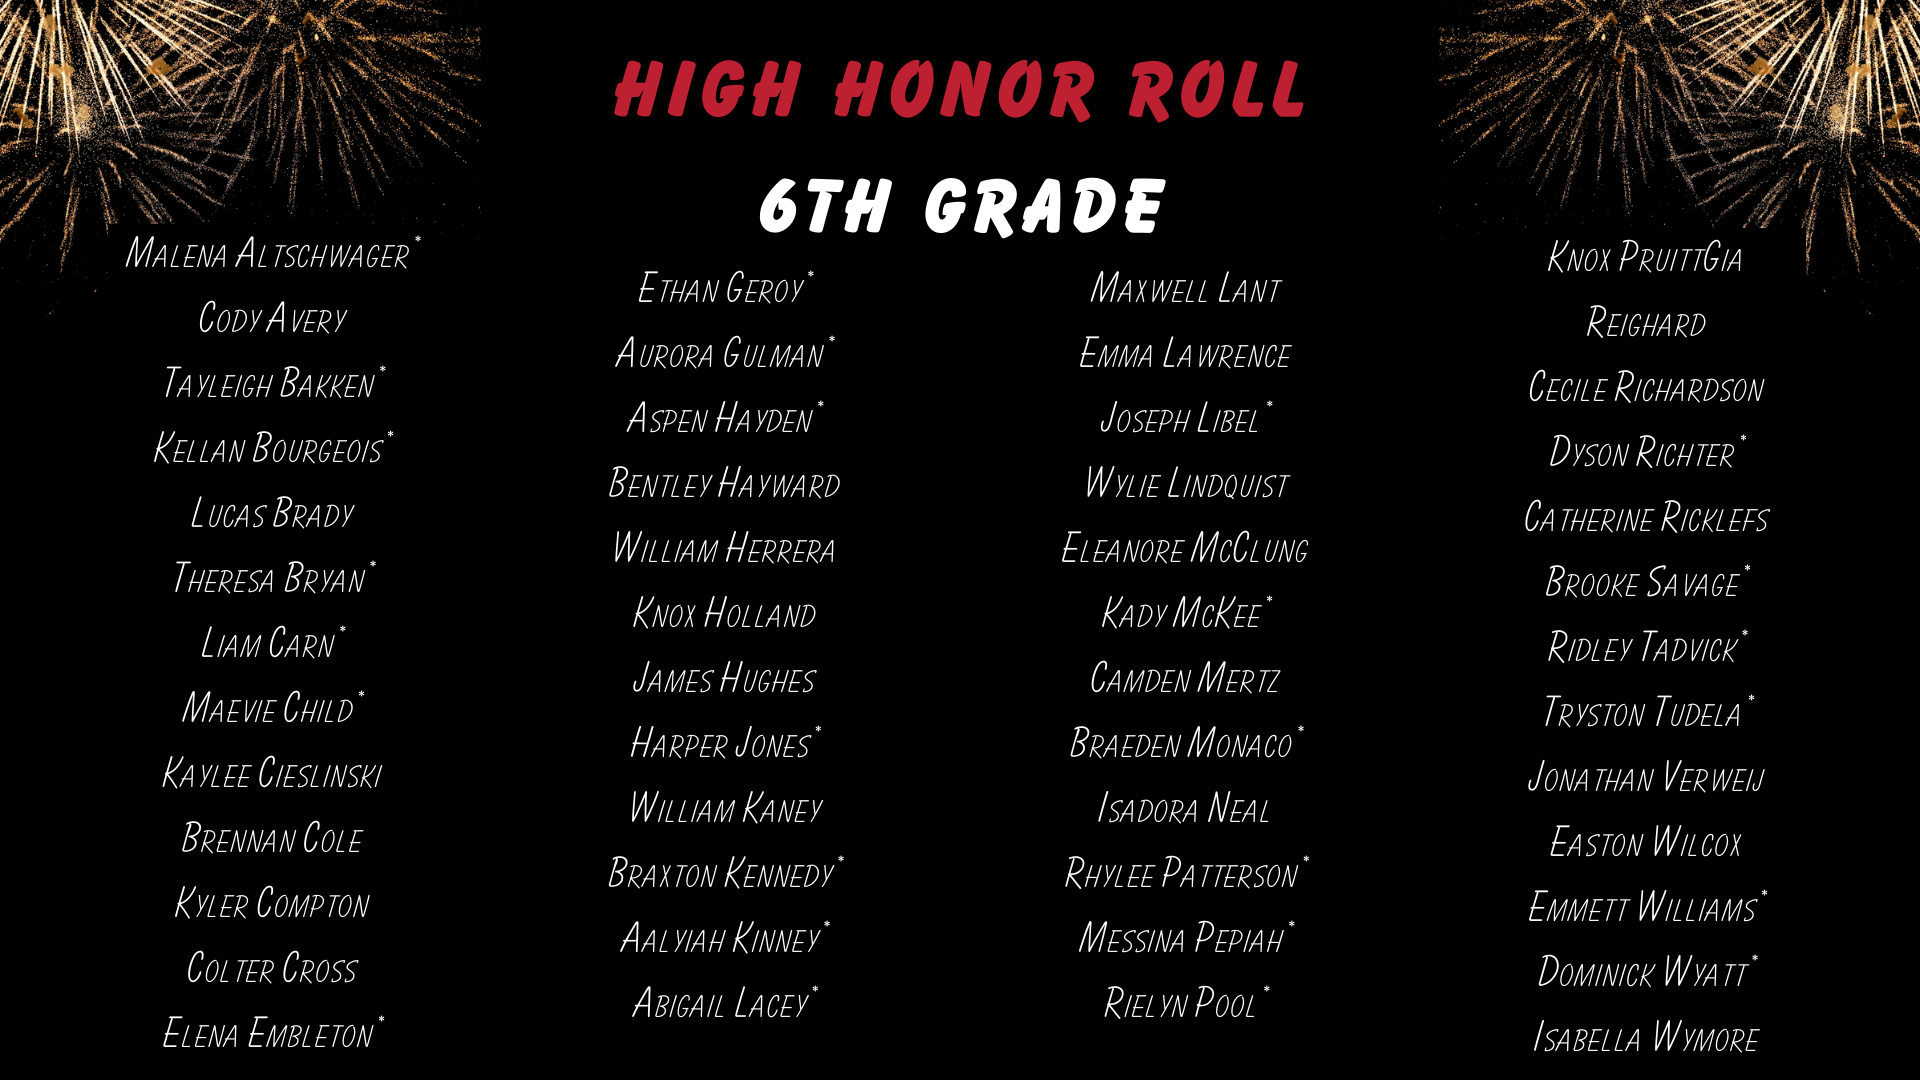 High Honor Roll 6th grade